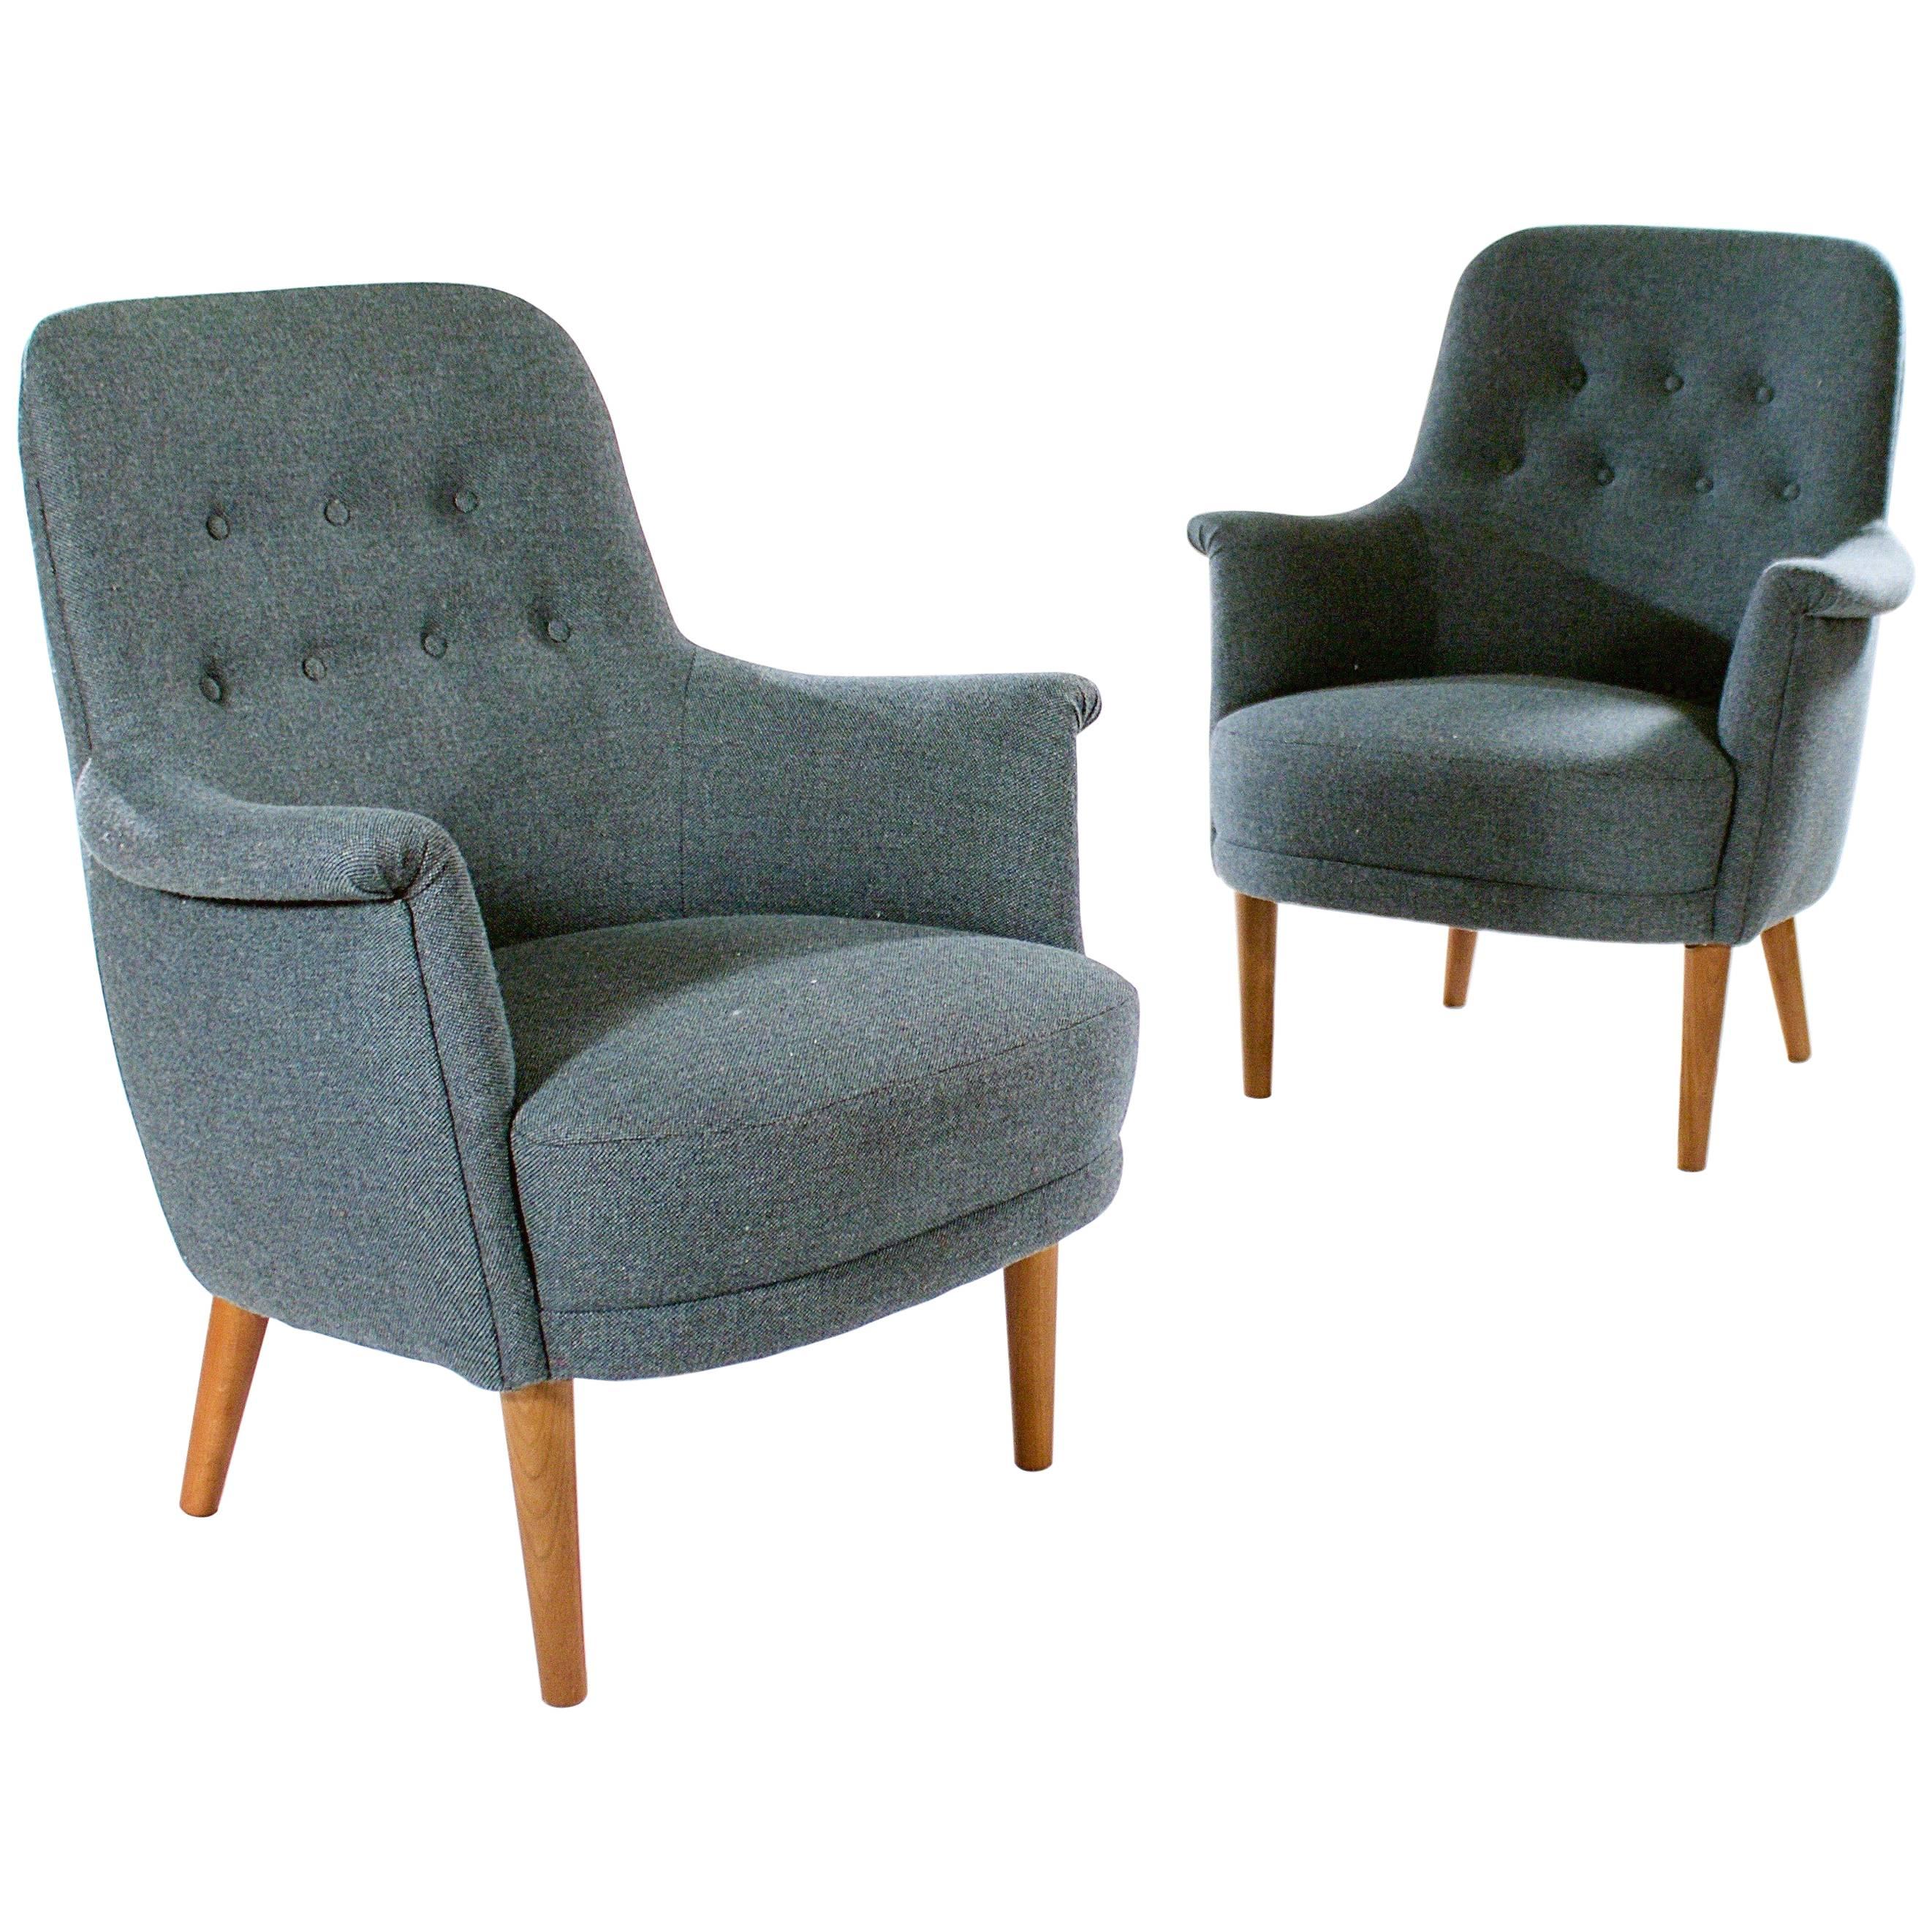 Pair of 'Husmor' Upholstered Easy Chairs by Carl Malmsten, (1888 -1972) For Sale